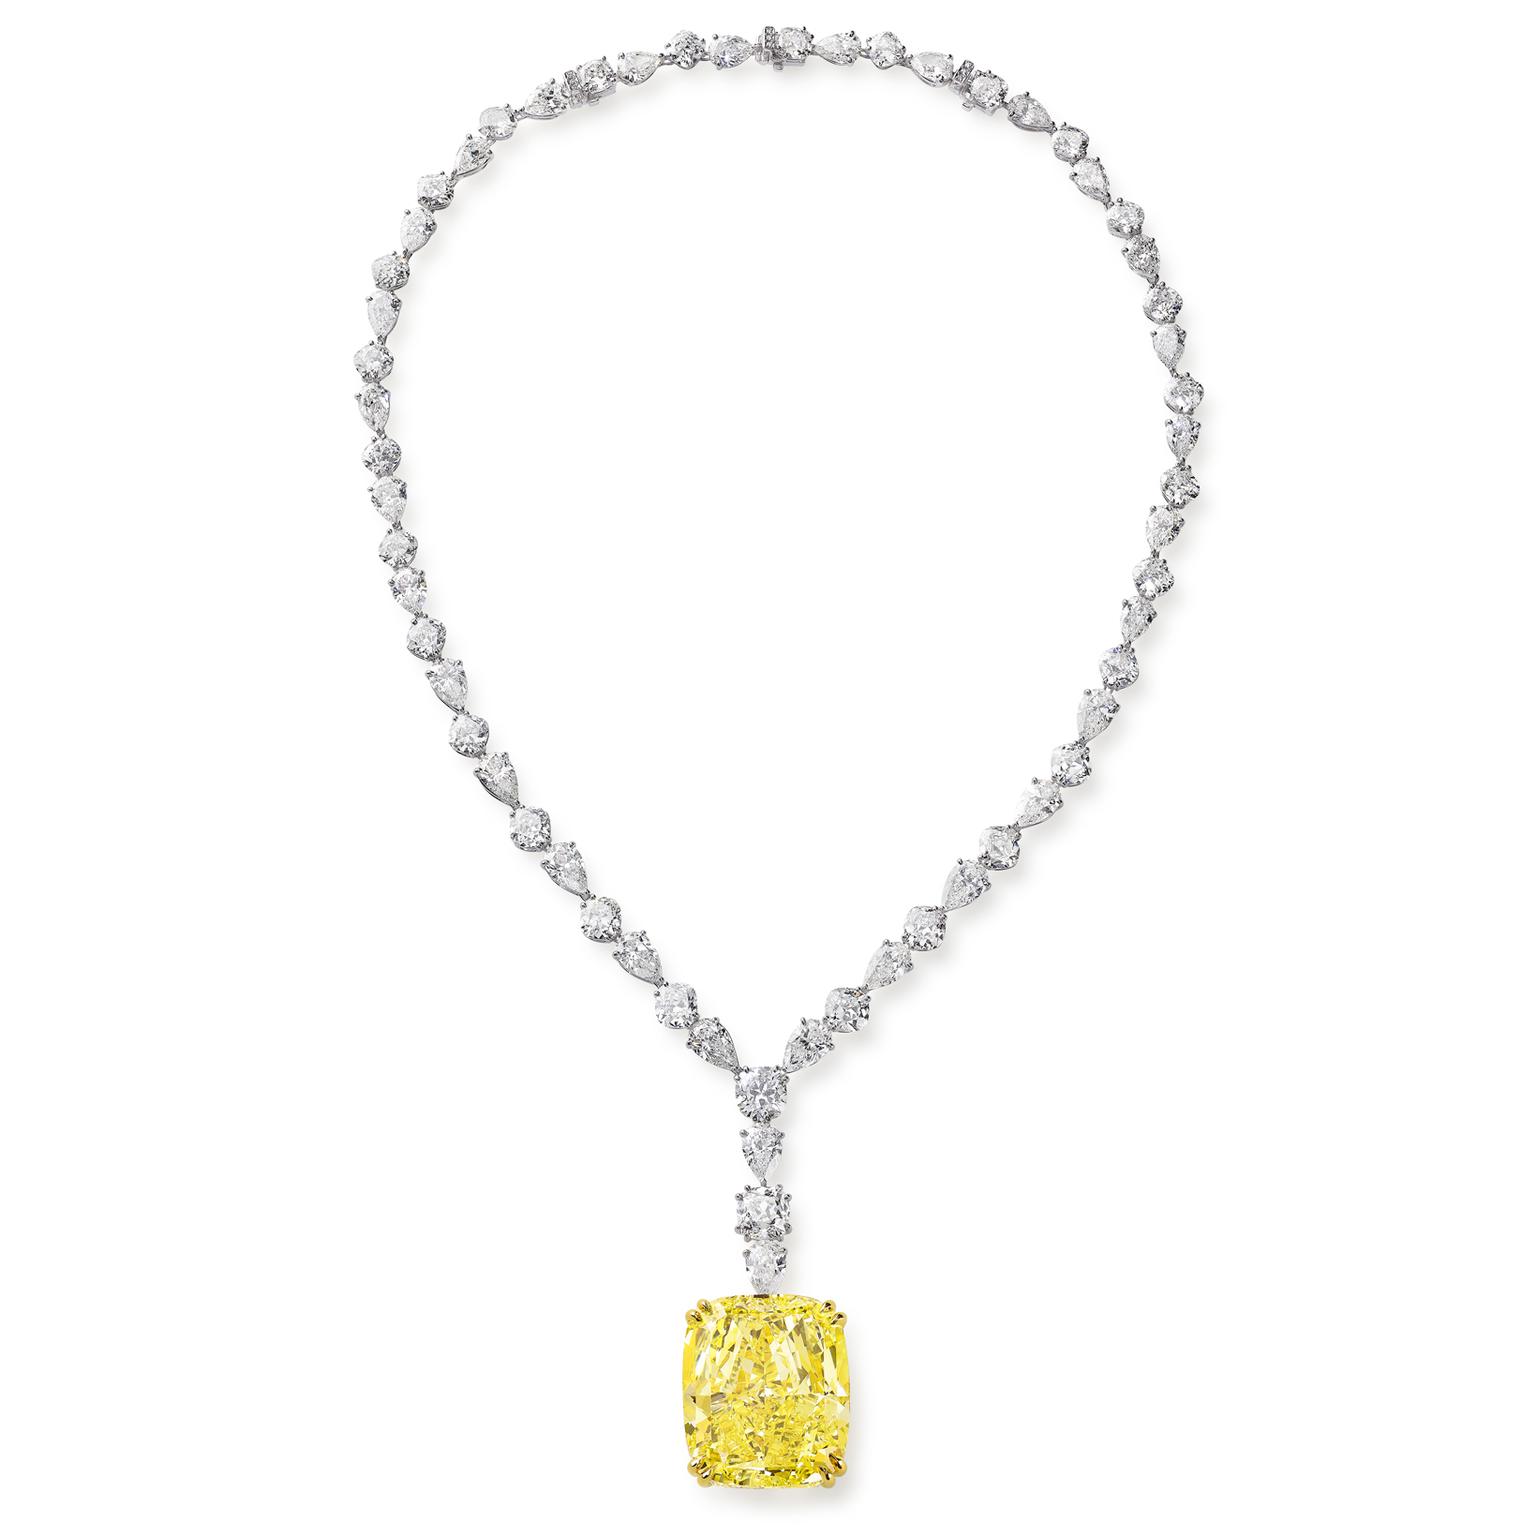 100-carat fancy intense yellow diamond necklace by Chopard